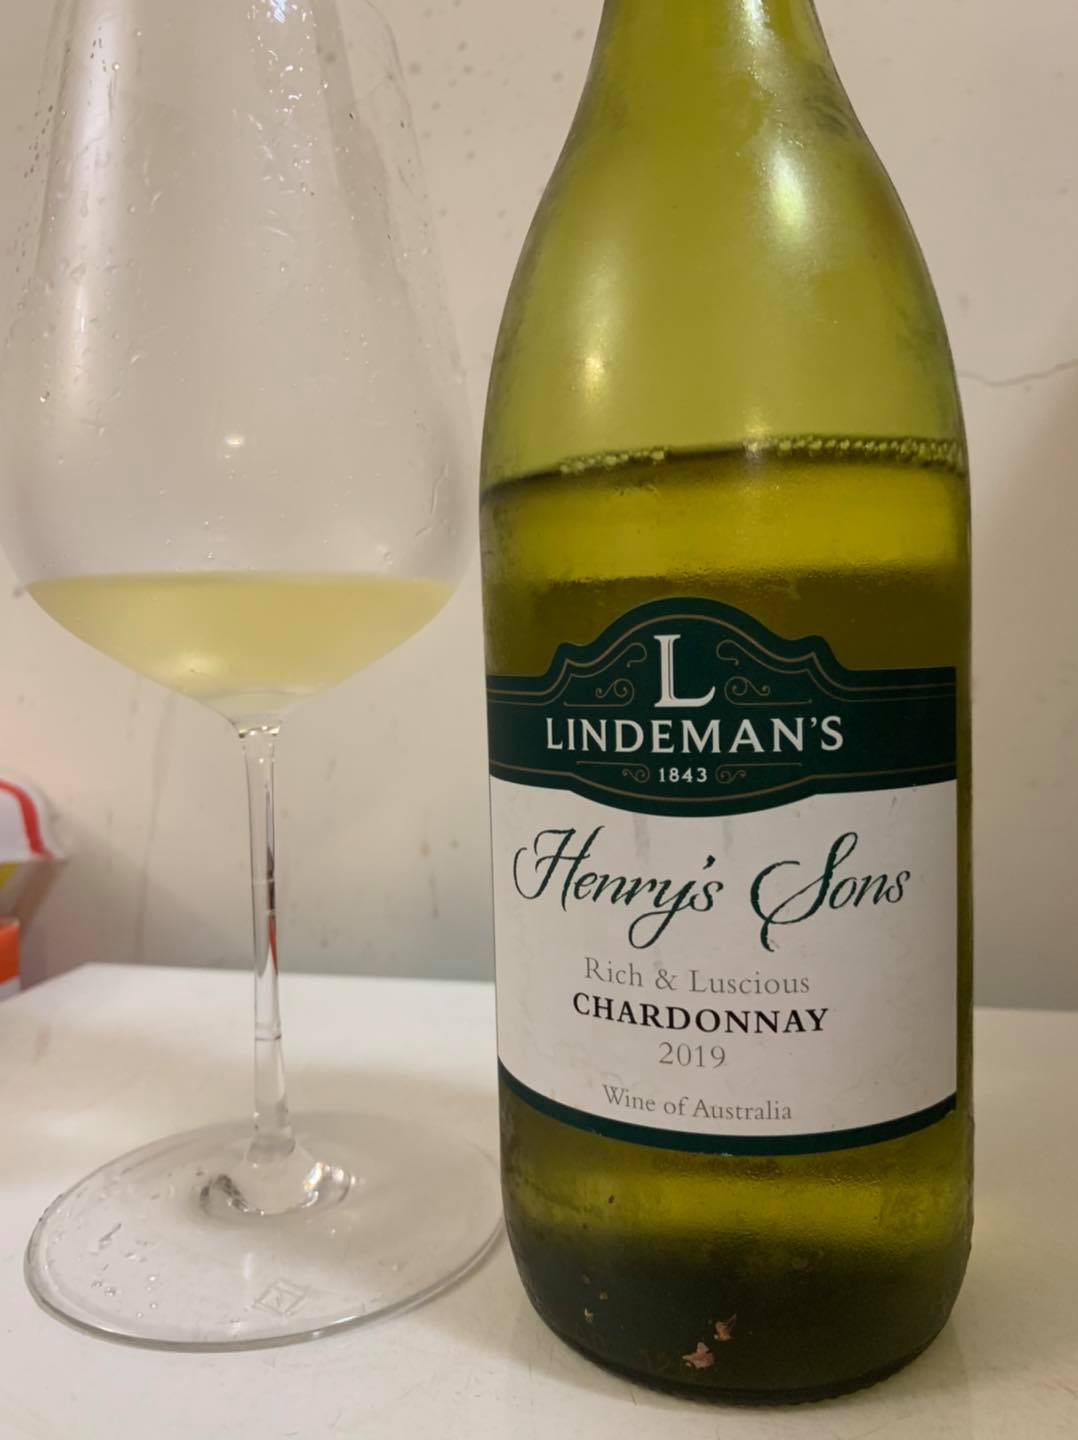  Lindeman's Henry's Sons Chardonnay 2019